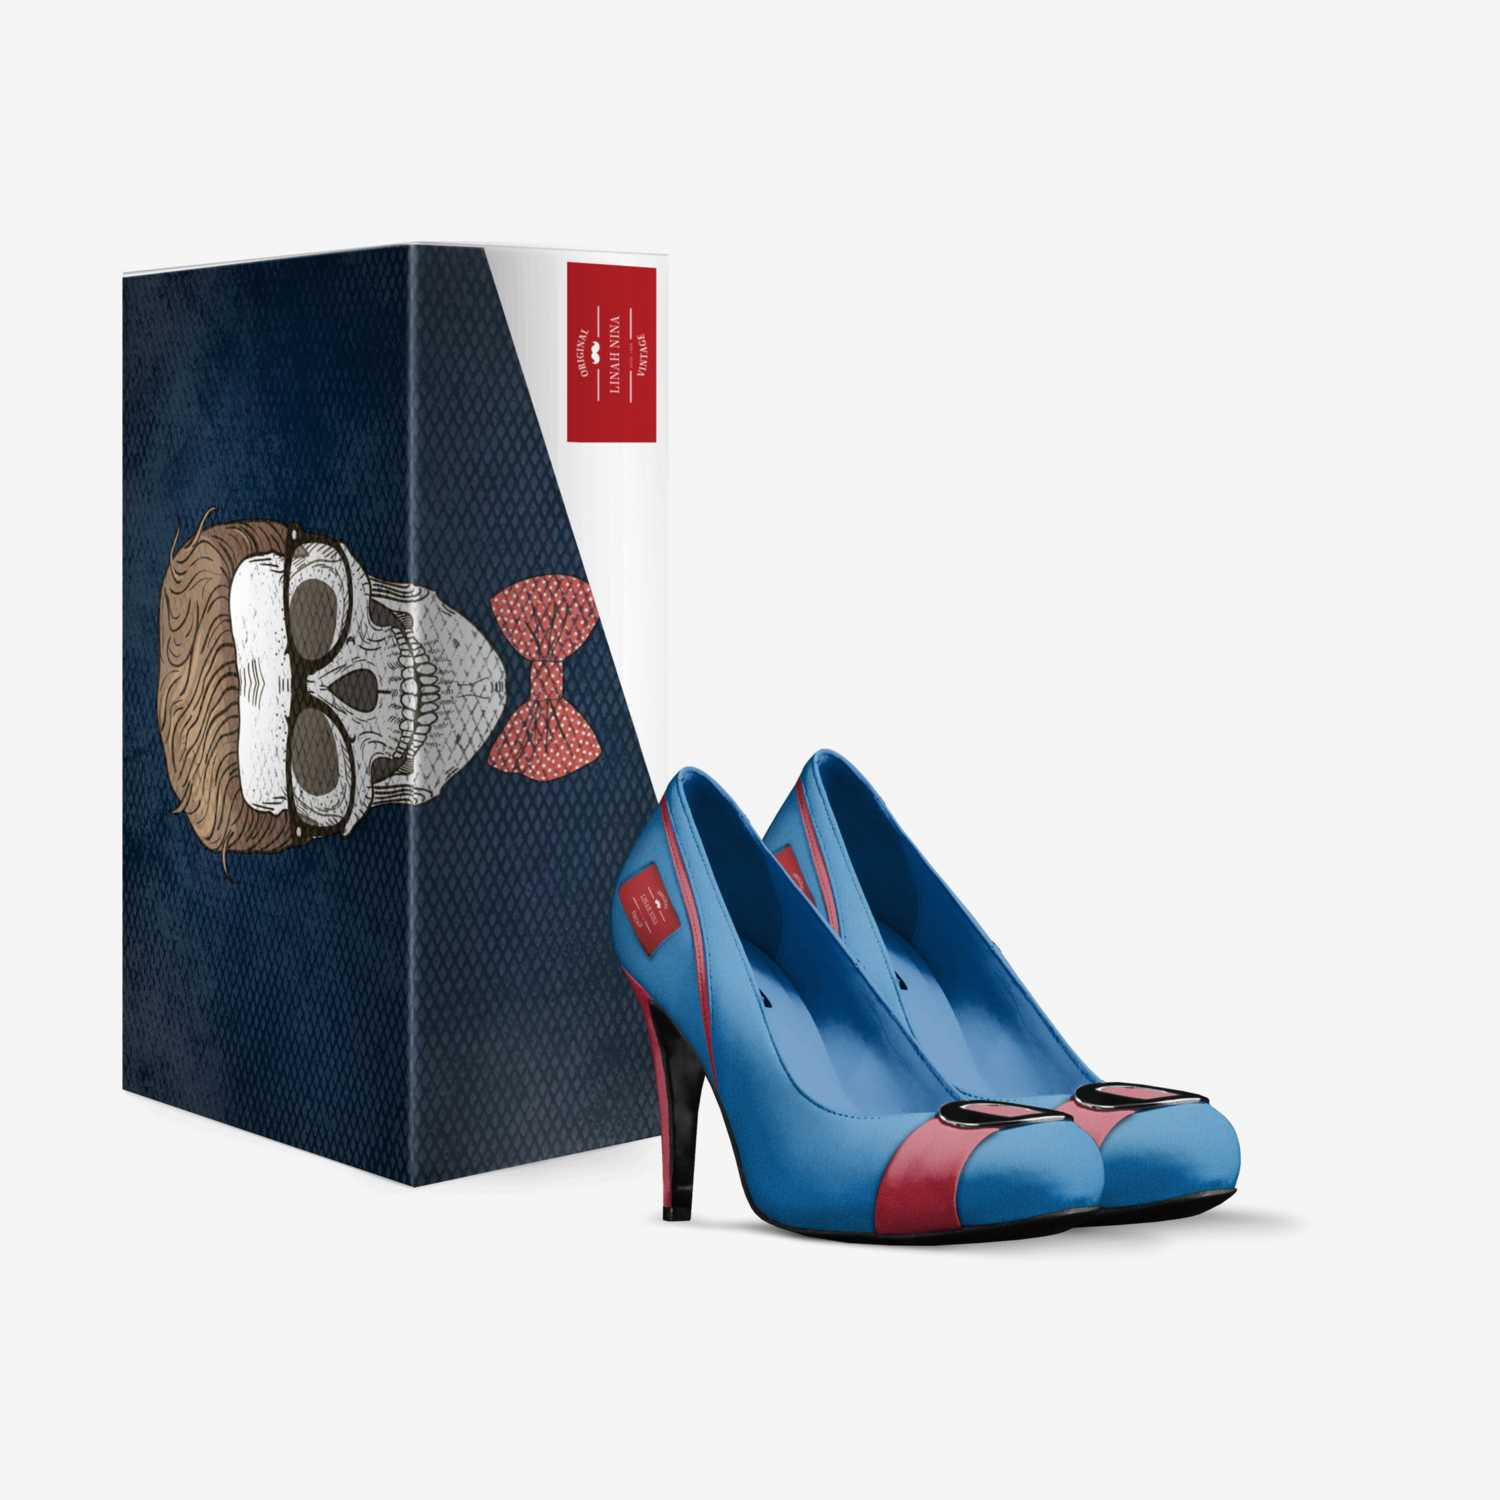 Linah Nina custom made in Italy shoes by Annie Faith Castleberry | Box view